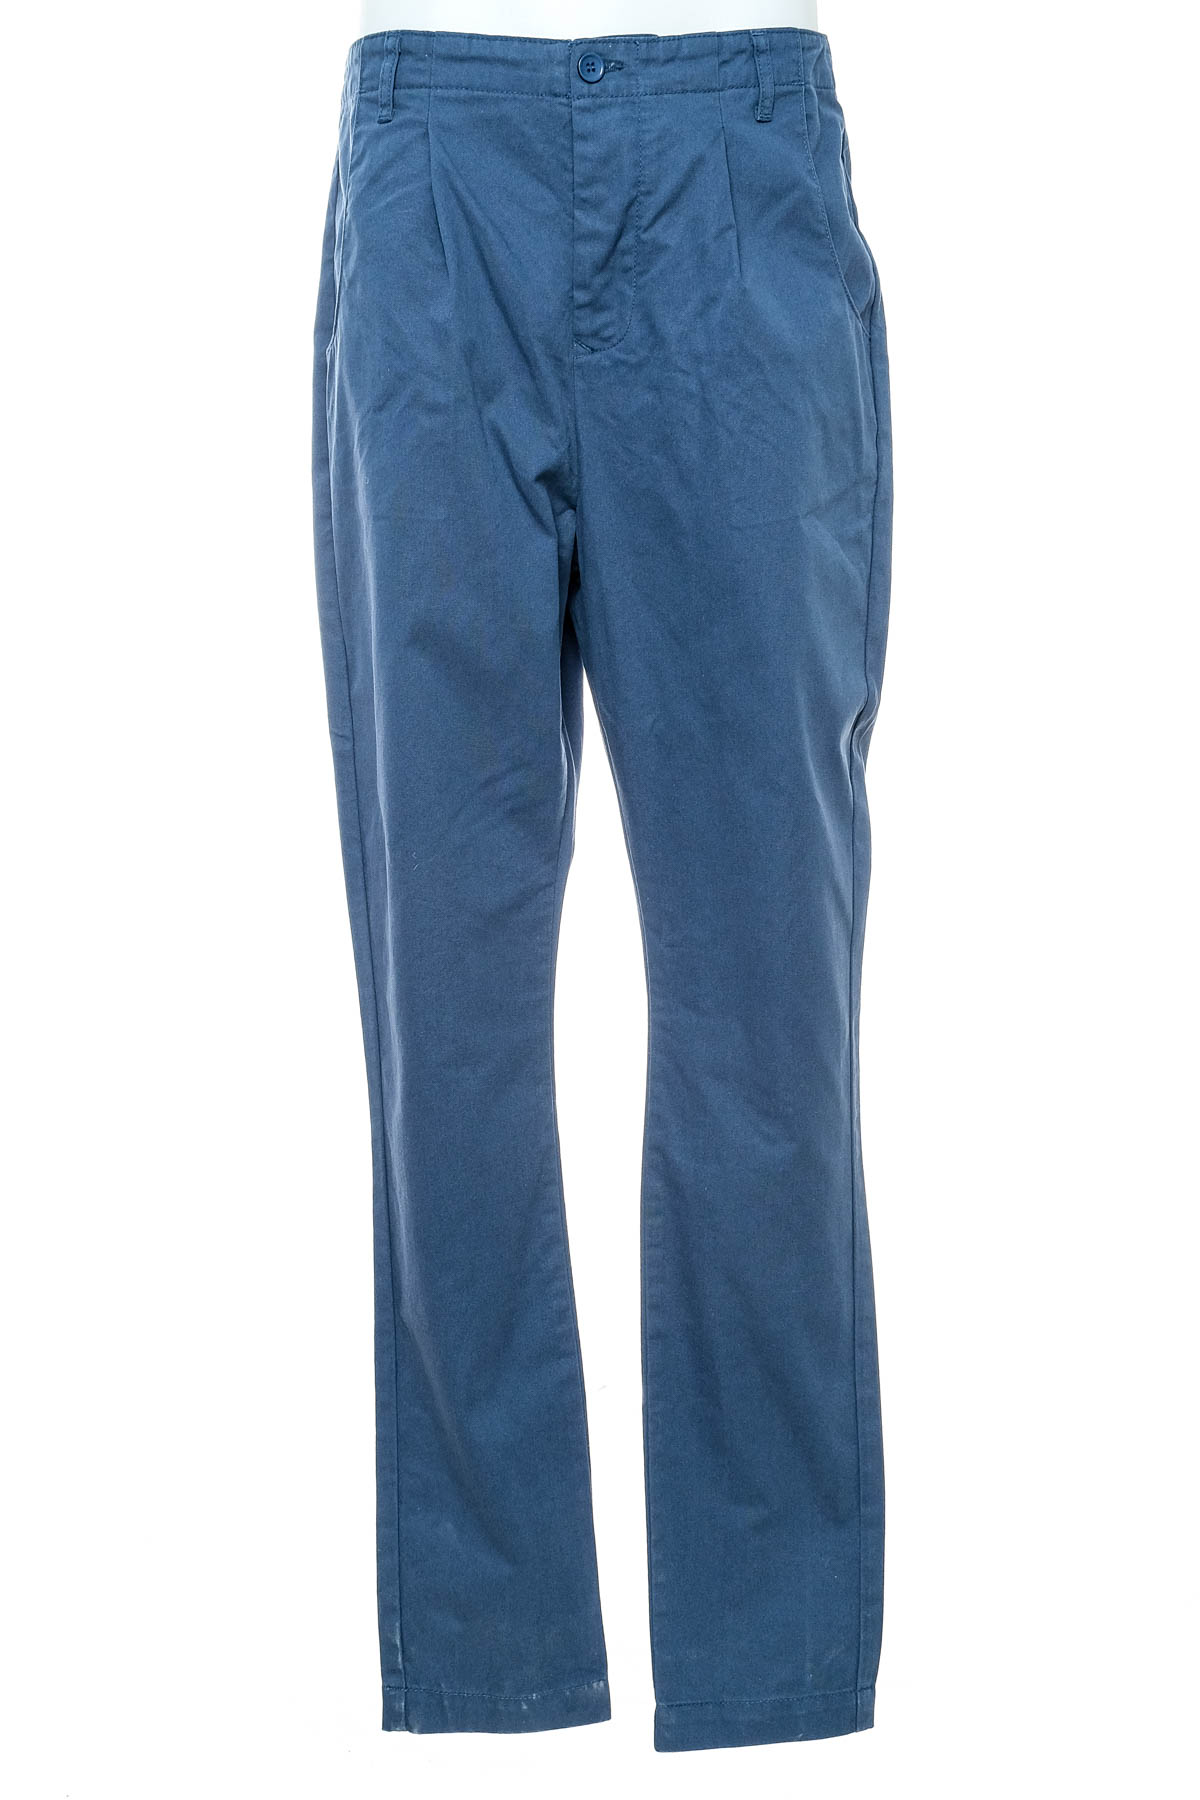 Pantalon pentru bărbați - Asos - 0